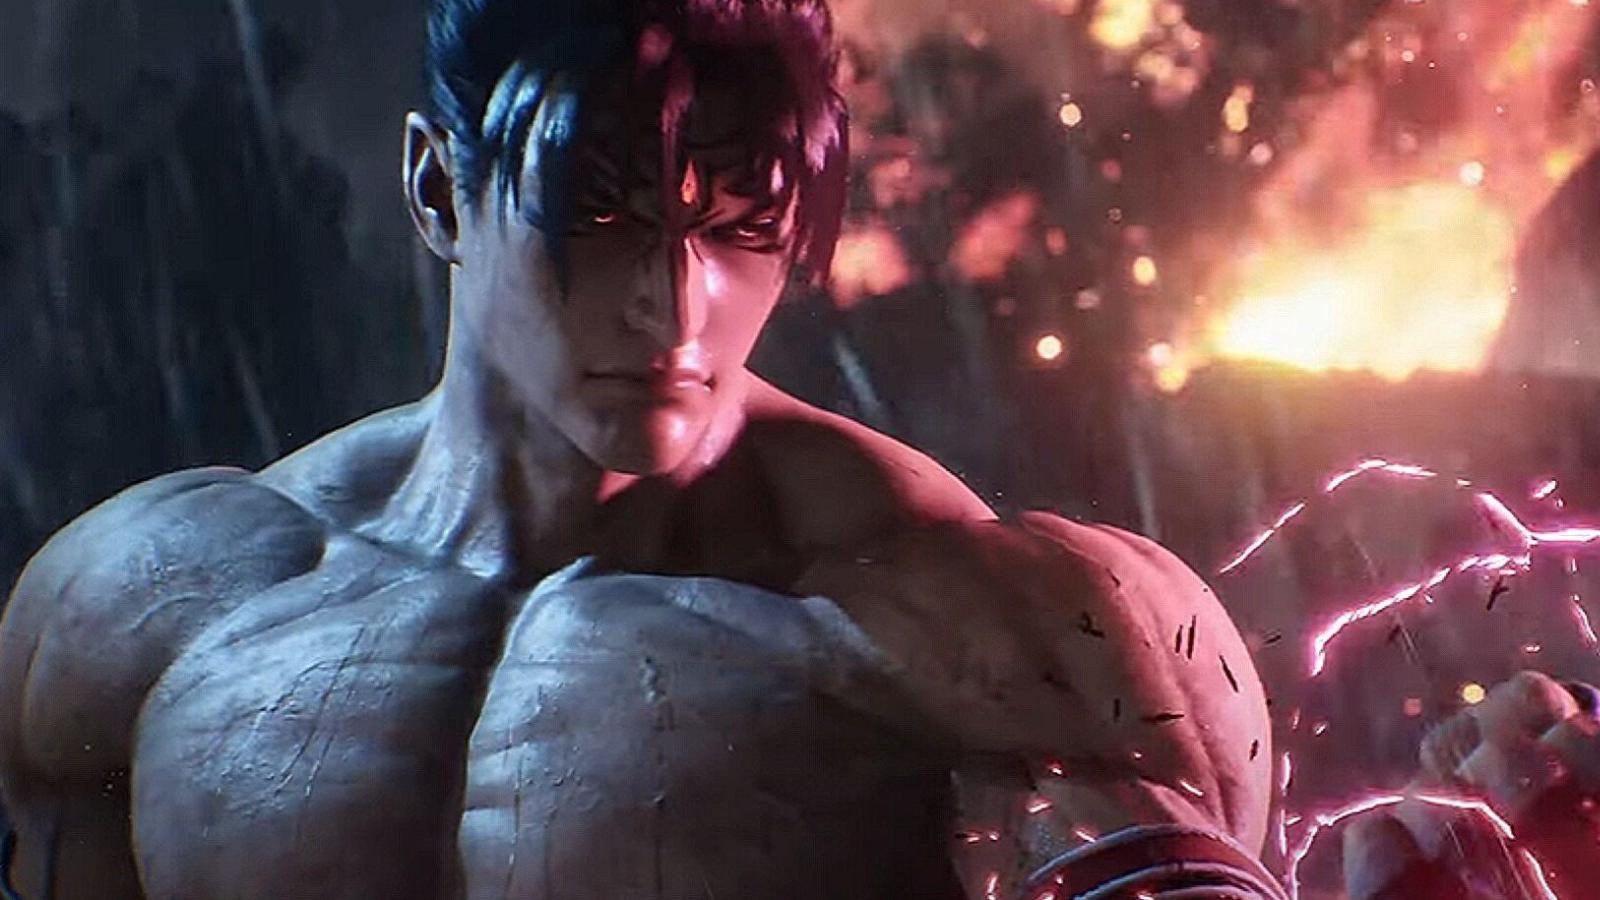 Bandai Namco announces Tekken 8 launch date